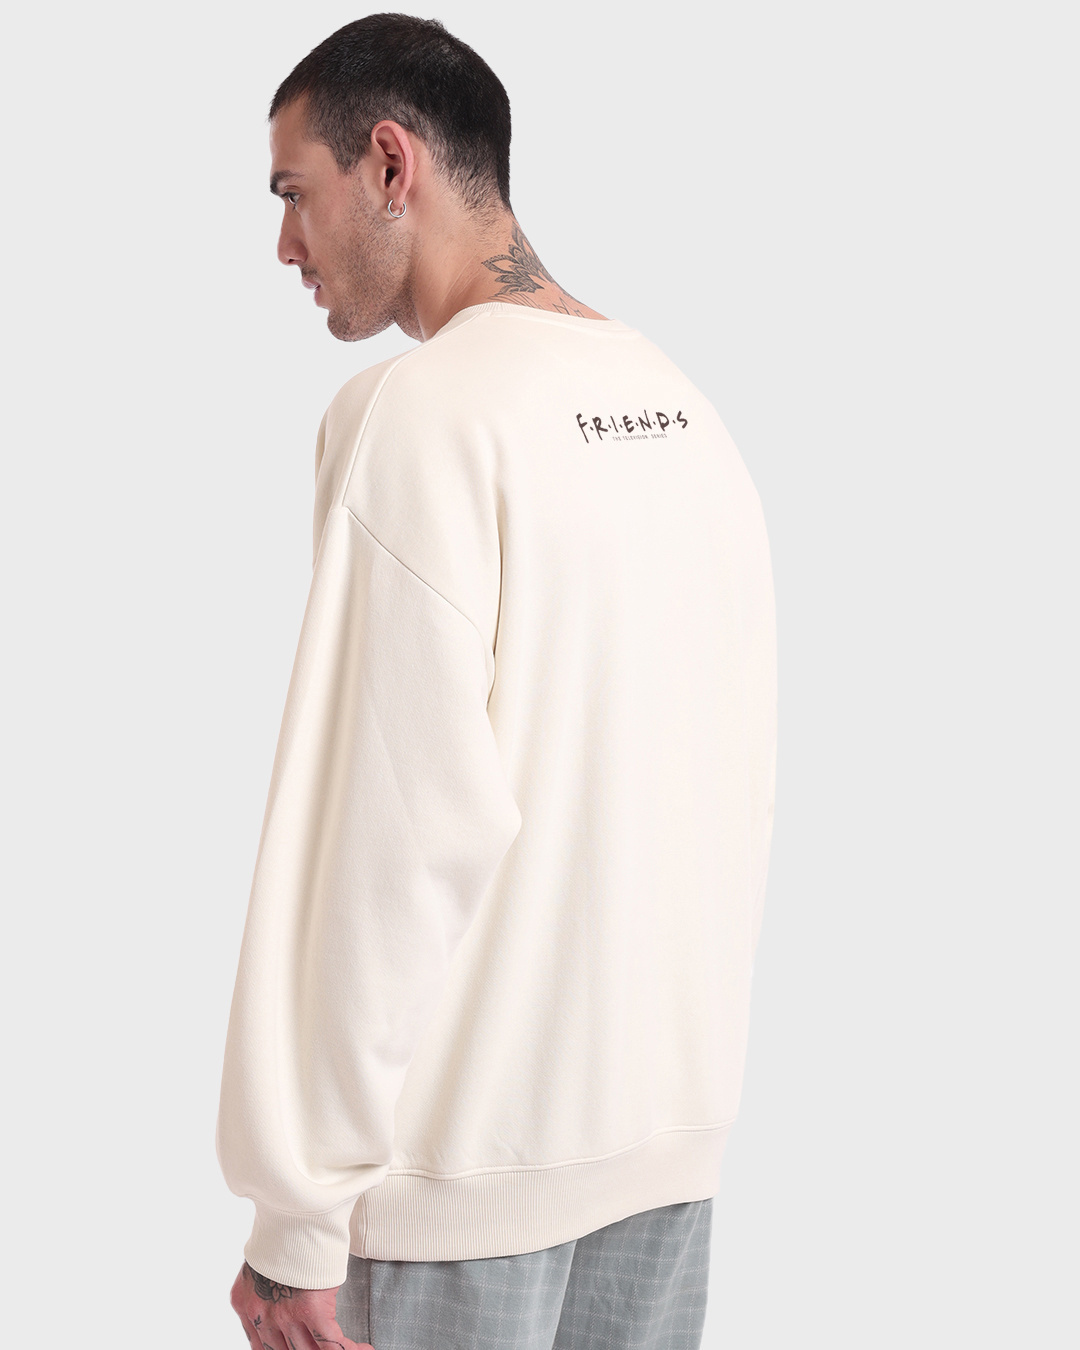 Shop Men's Gardenia Fluent in Friends Graphic Printed Oversized Sweatshirt-Back